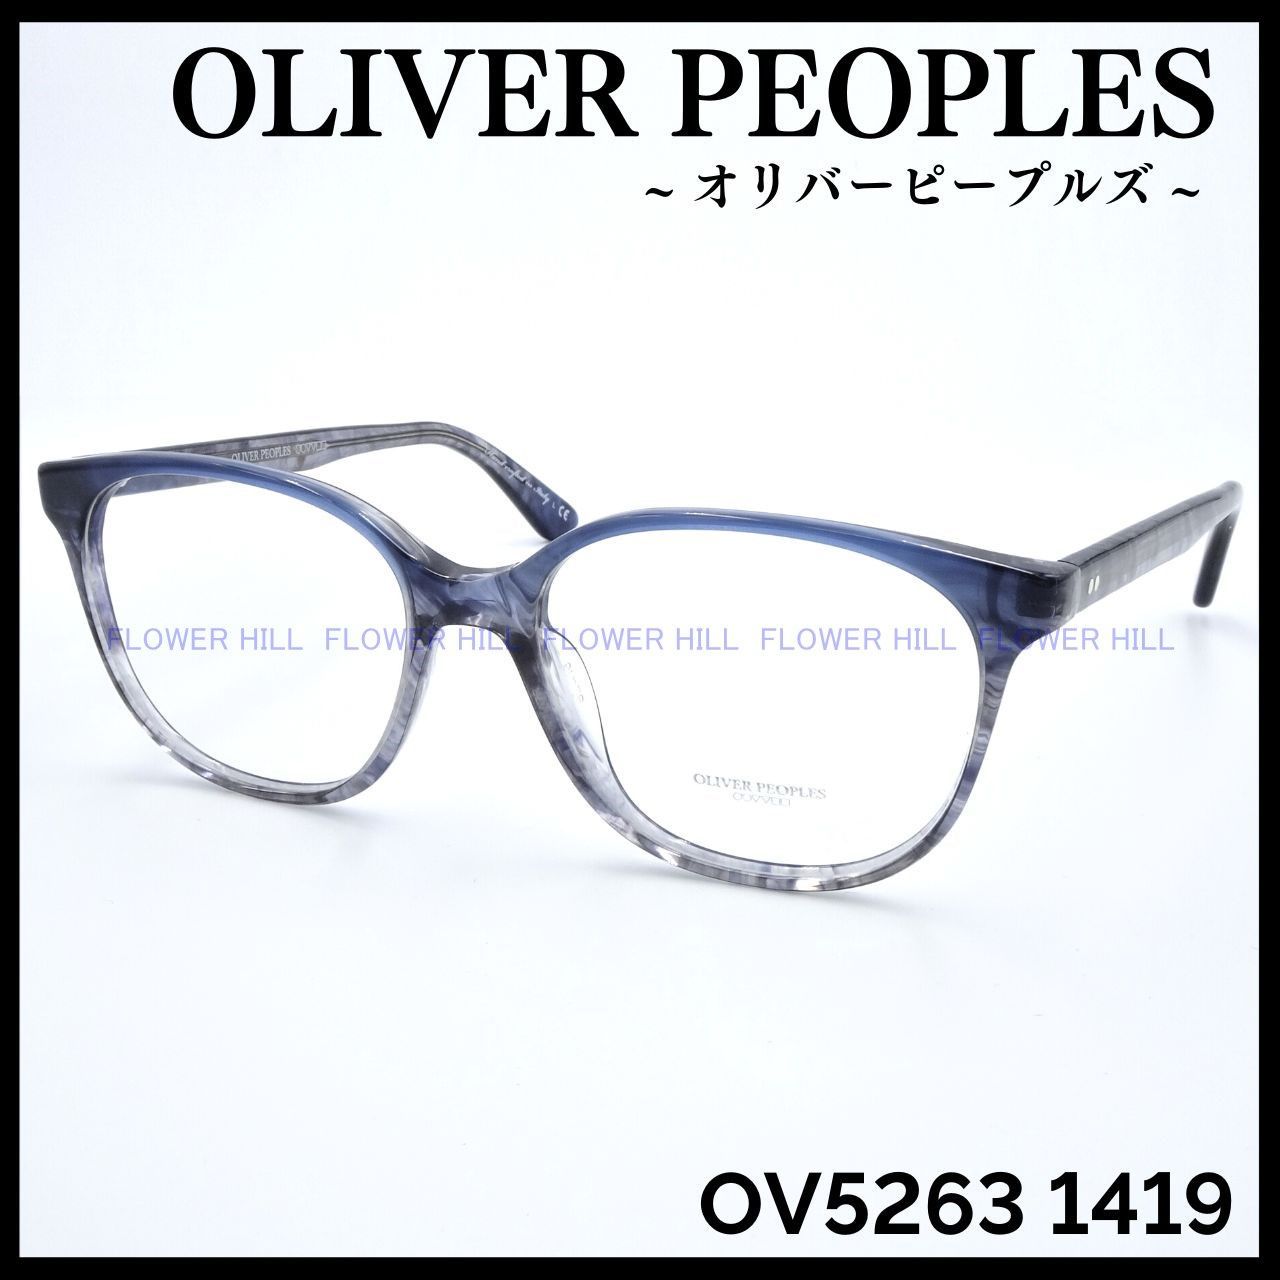 OLIVER PEOPLES オリバーピープルズ メガネ フレーム OV5263 1419 クリアーダークブルー イタリア製 メンズ レディース